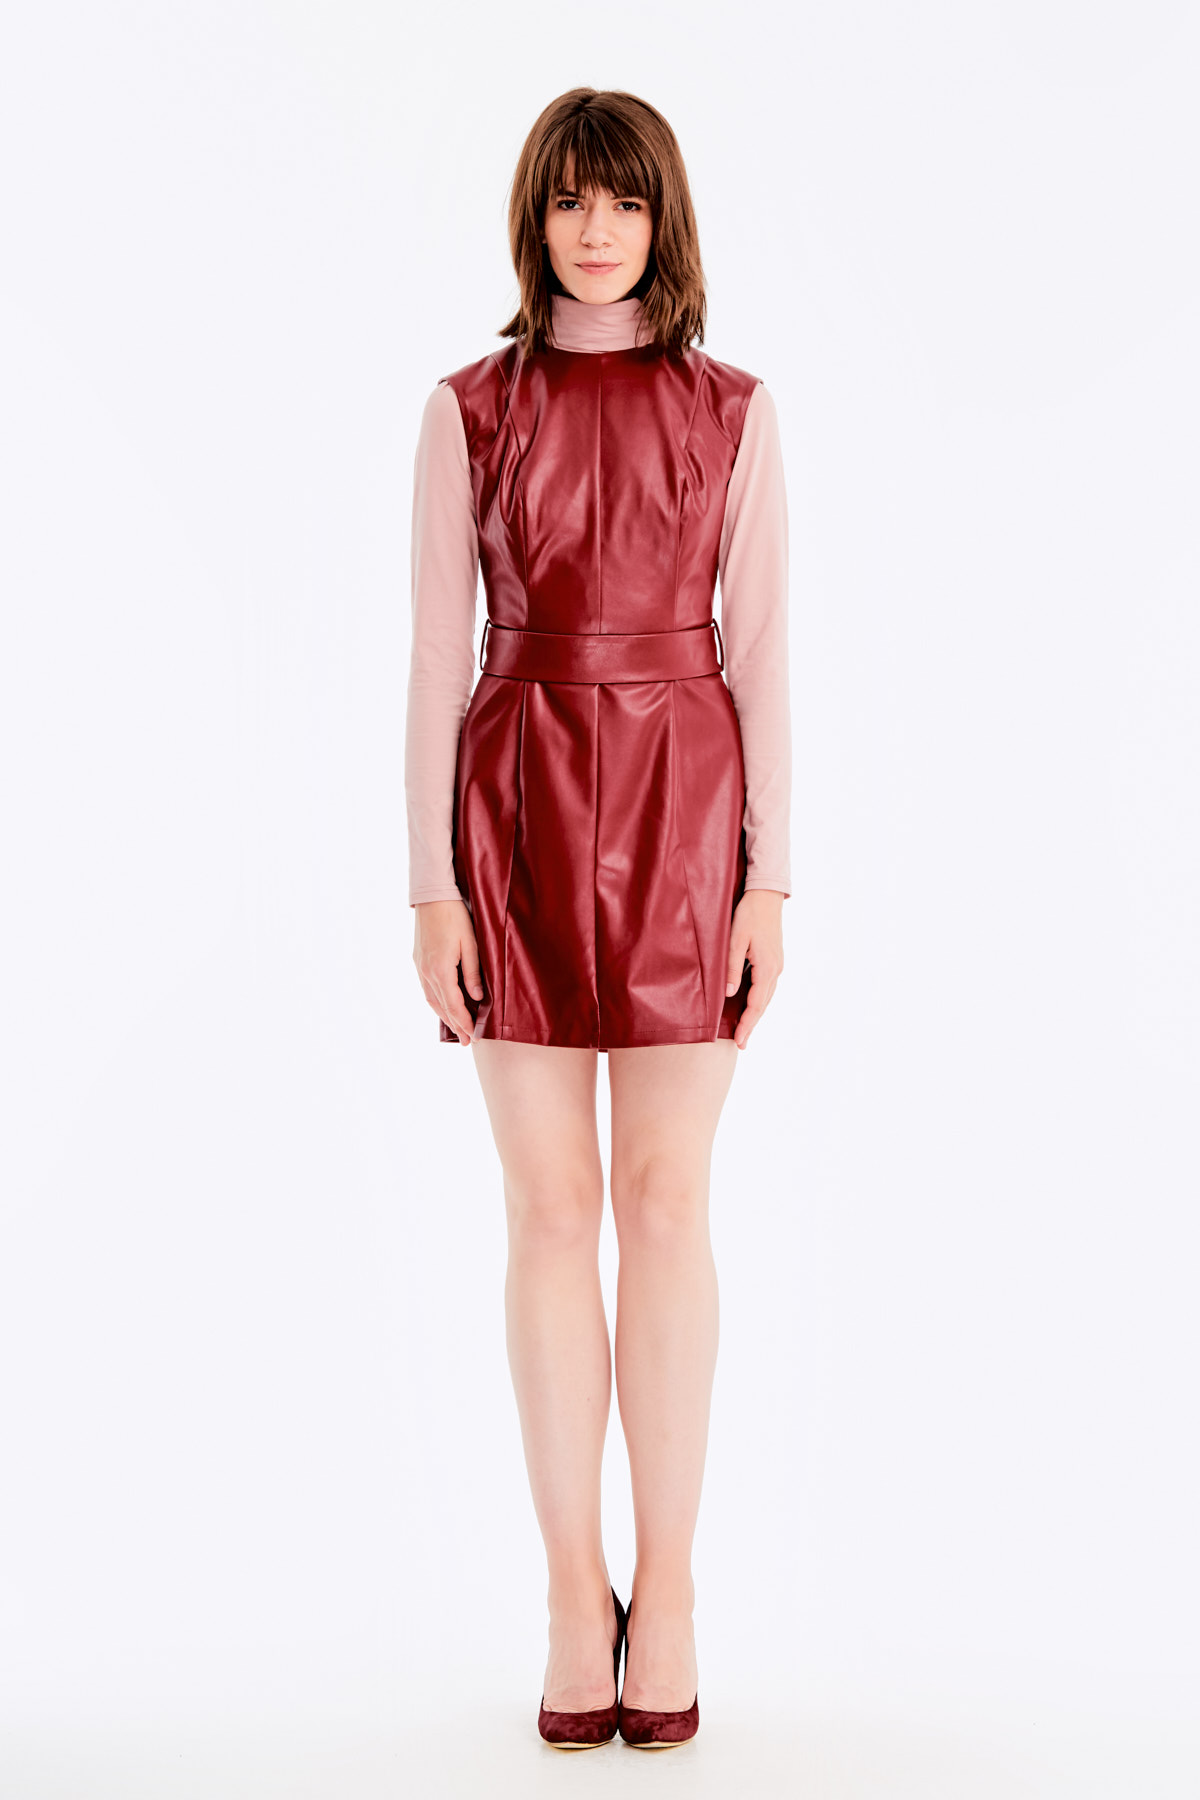 Below-knee burgundy leather dress , photo 3